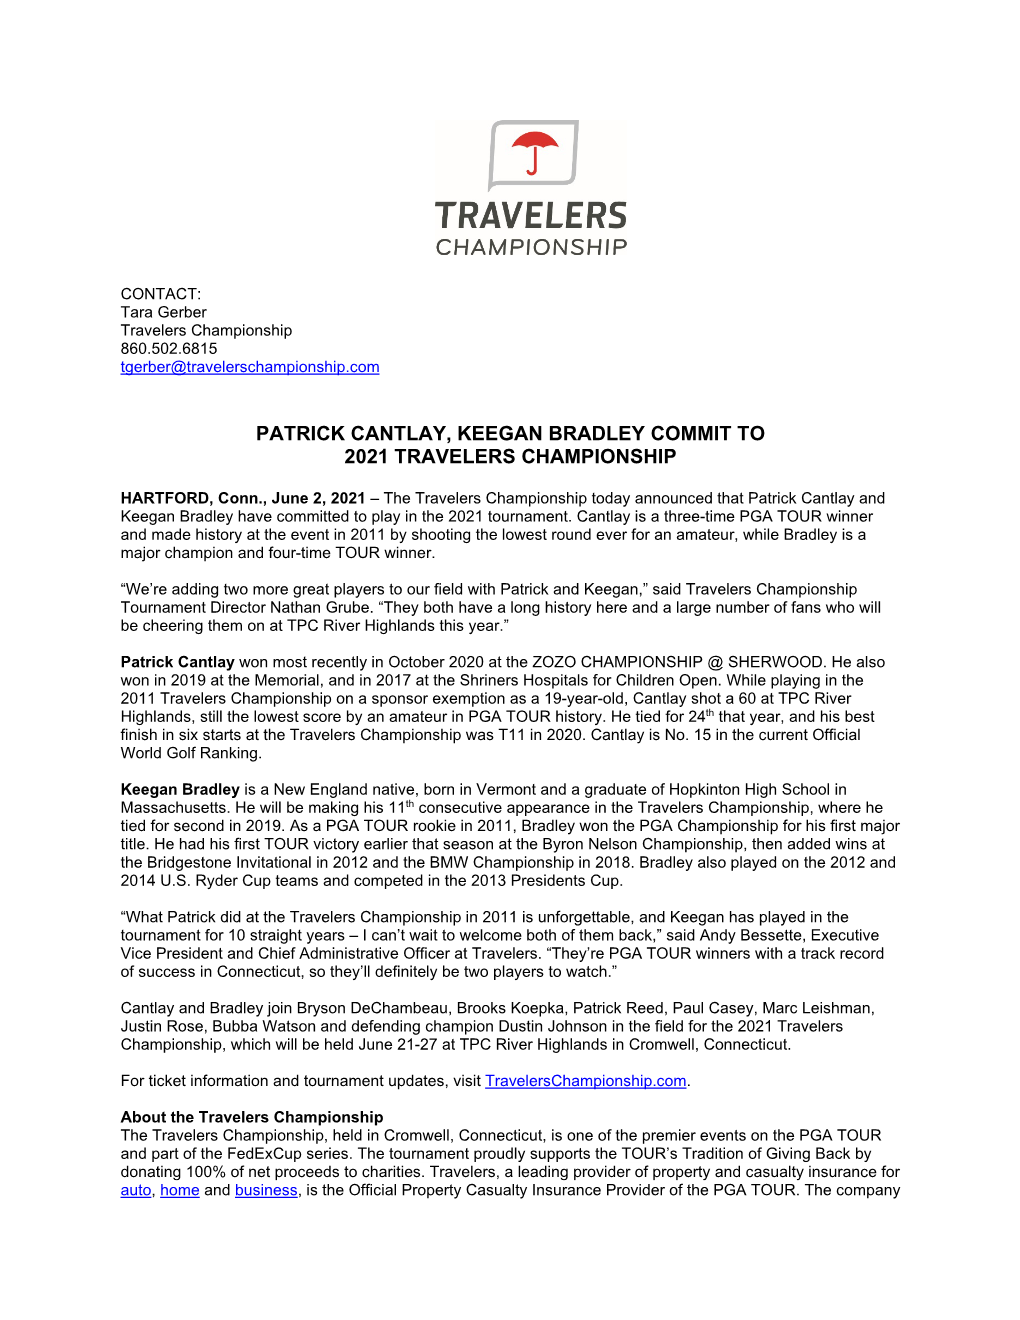 Patrick Cantlay, Keegan Bradley Commit to 2021 Travelers Championship